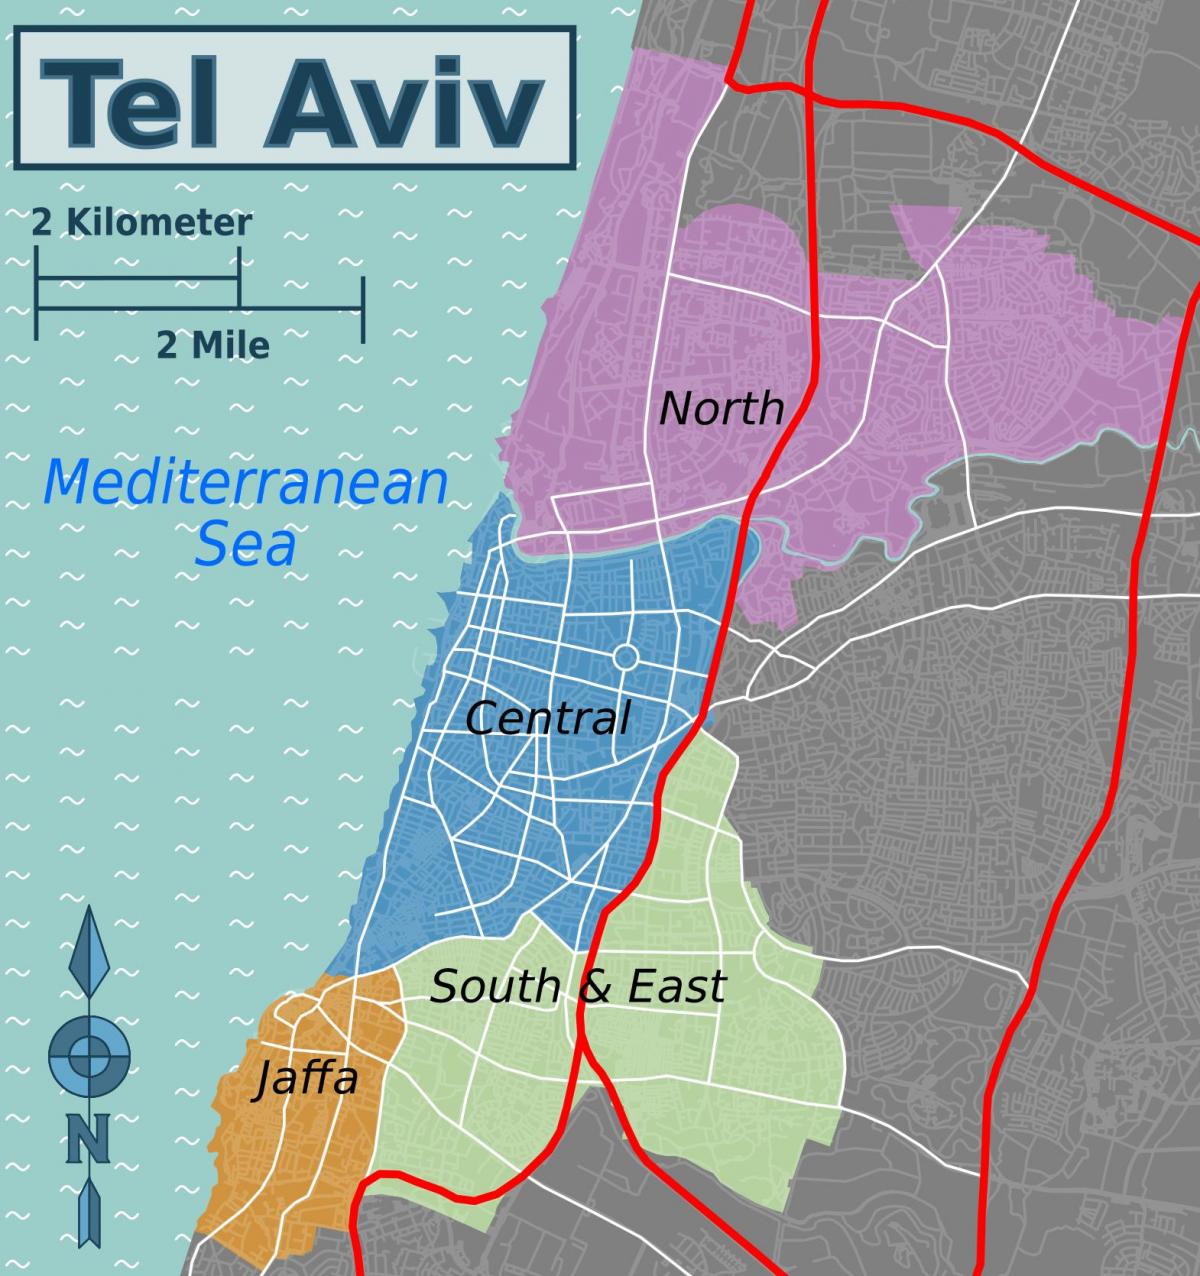 Tel Aviv district map